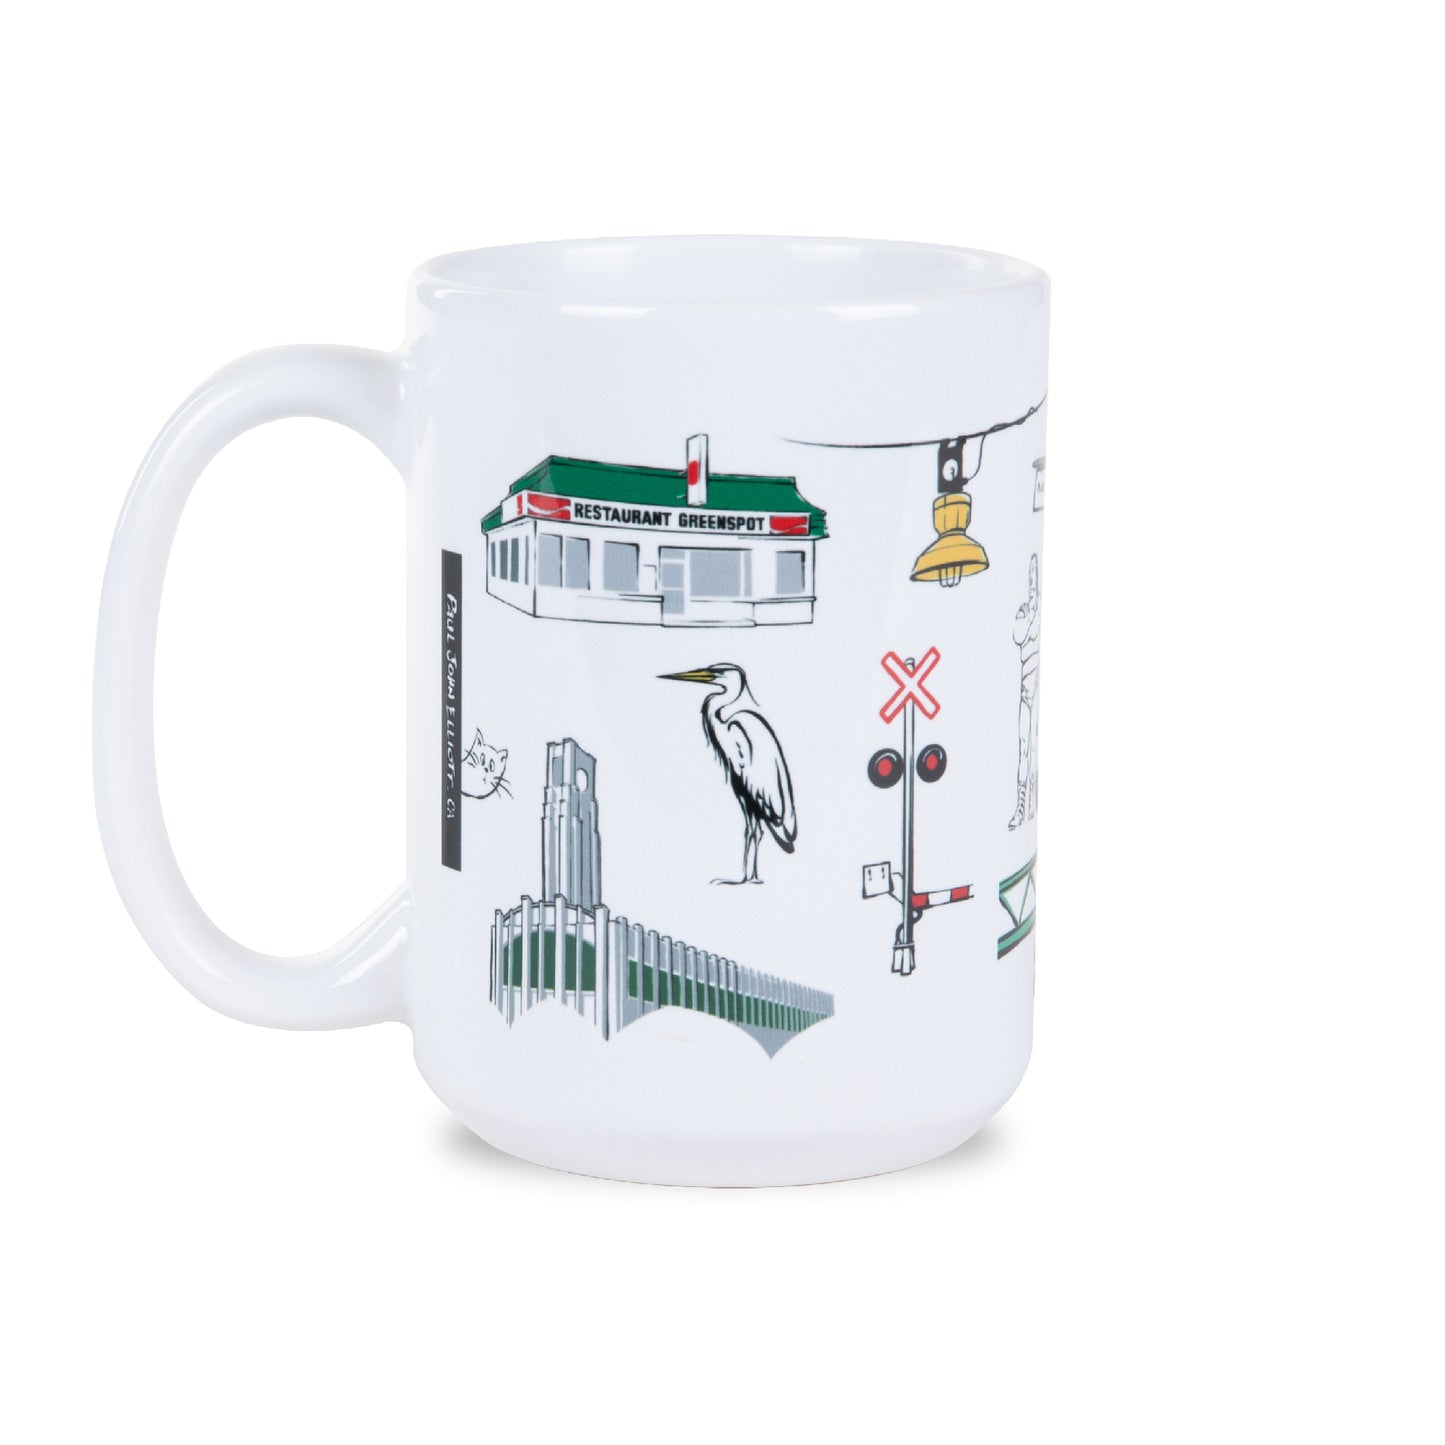 saint henri coffee mug, white ceramic, 15oz, illustrations, landmarks, icons, greenspot, atwater market, heron, railroad crossing, atwater lights, paul john elliott